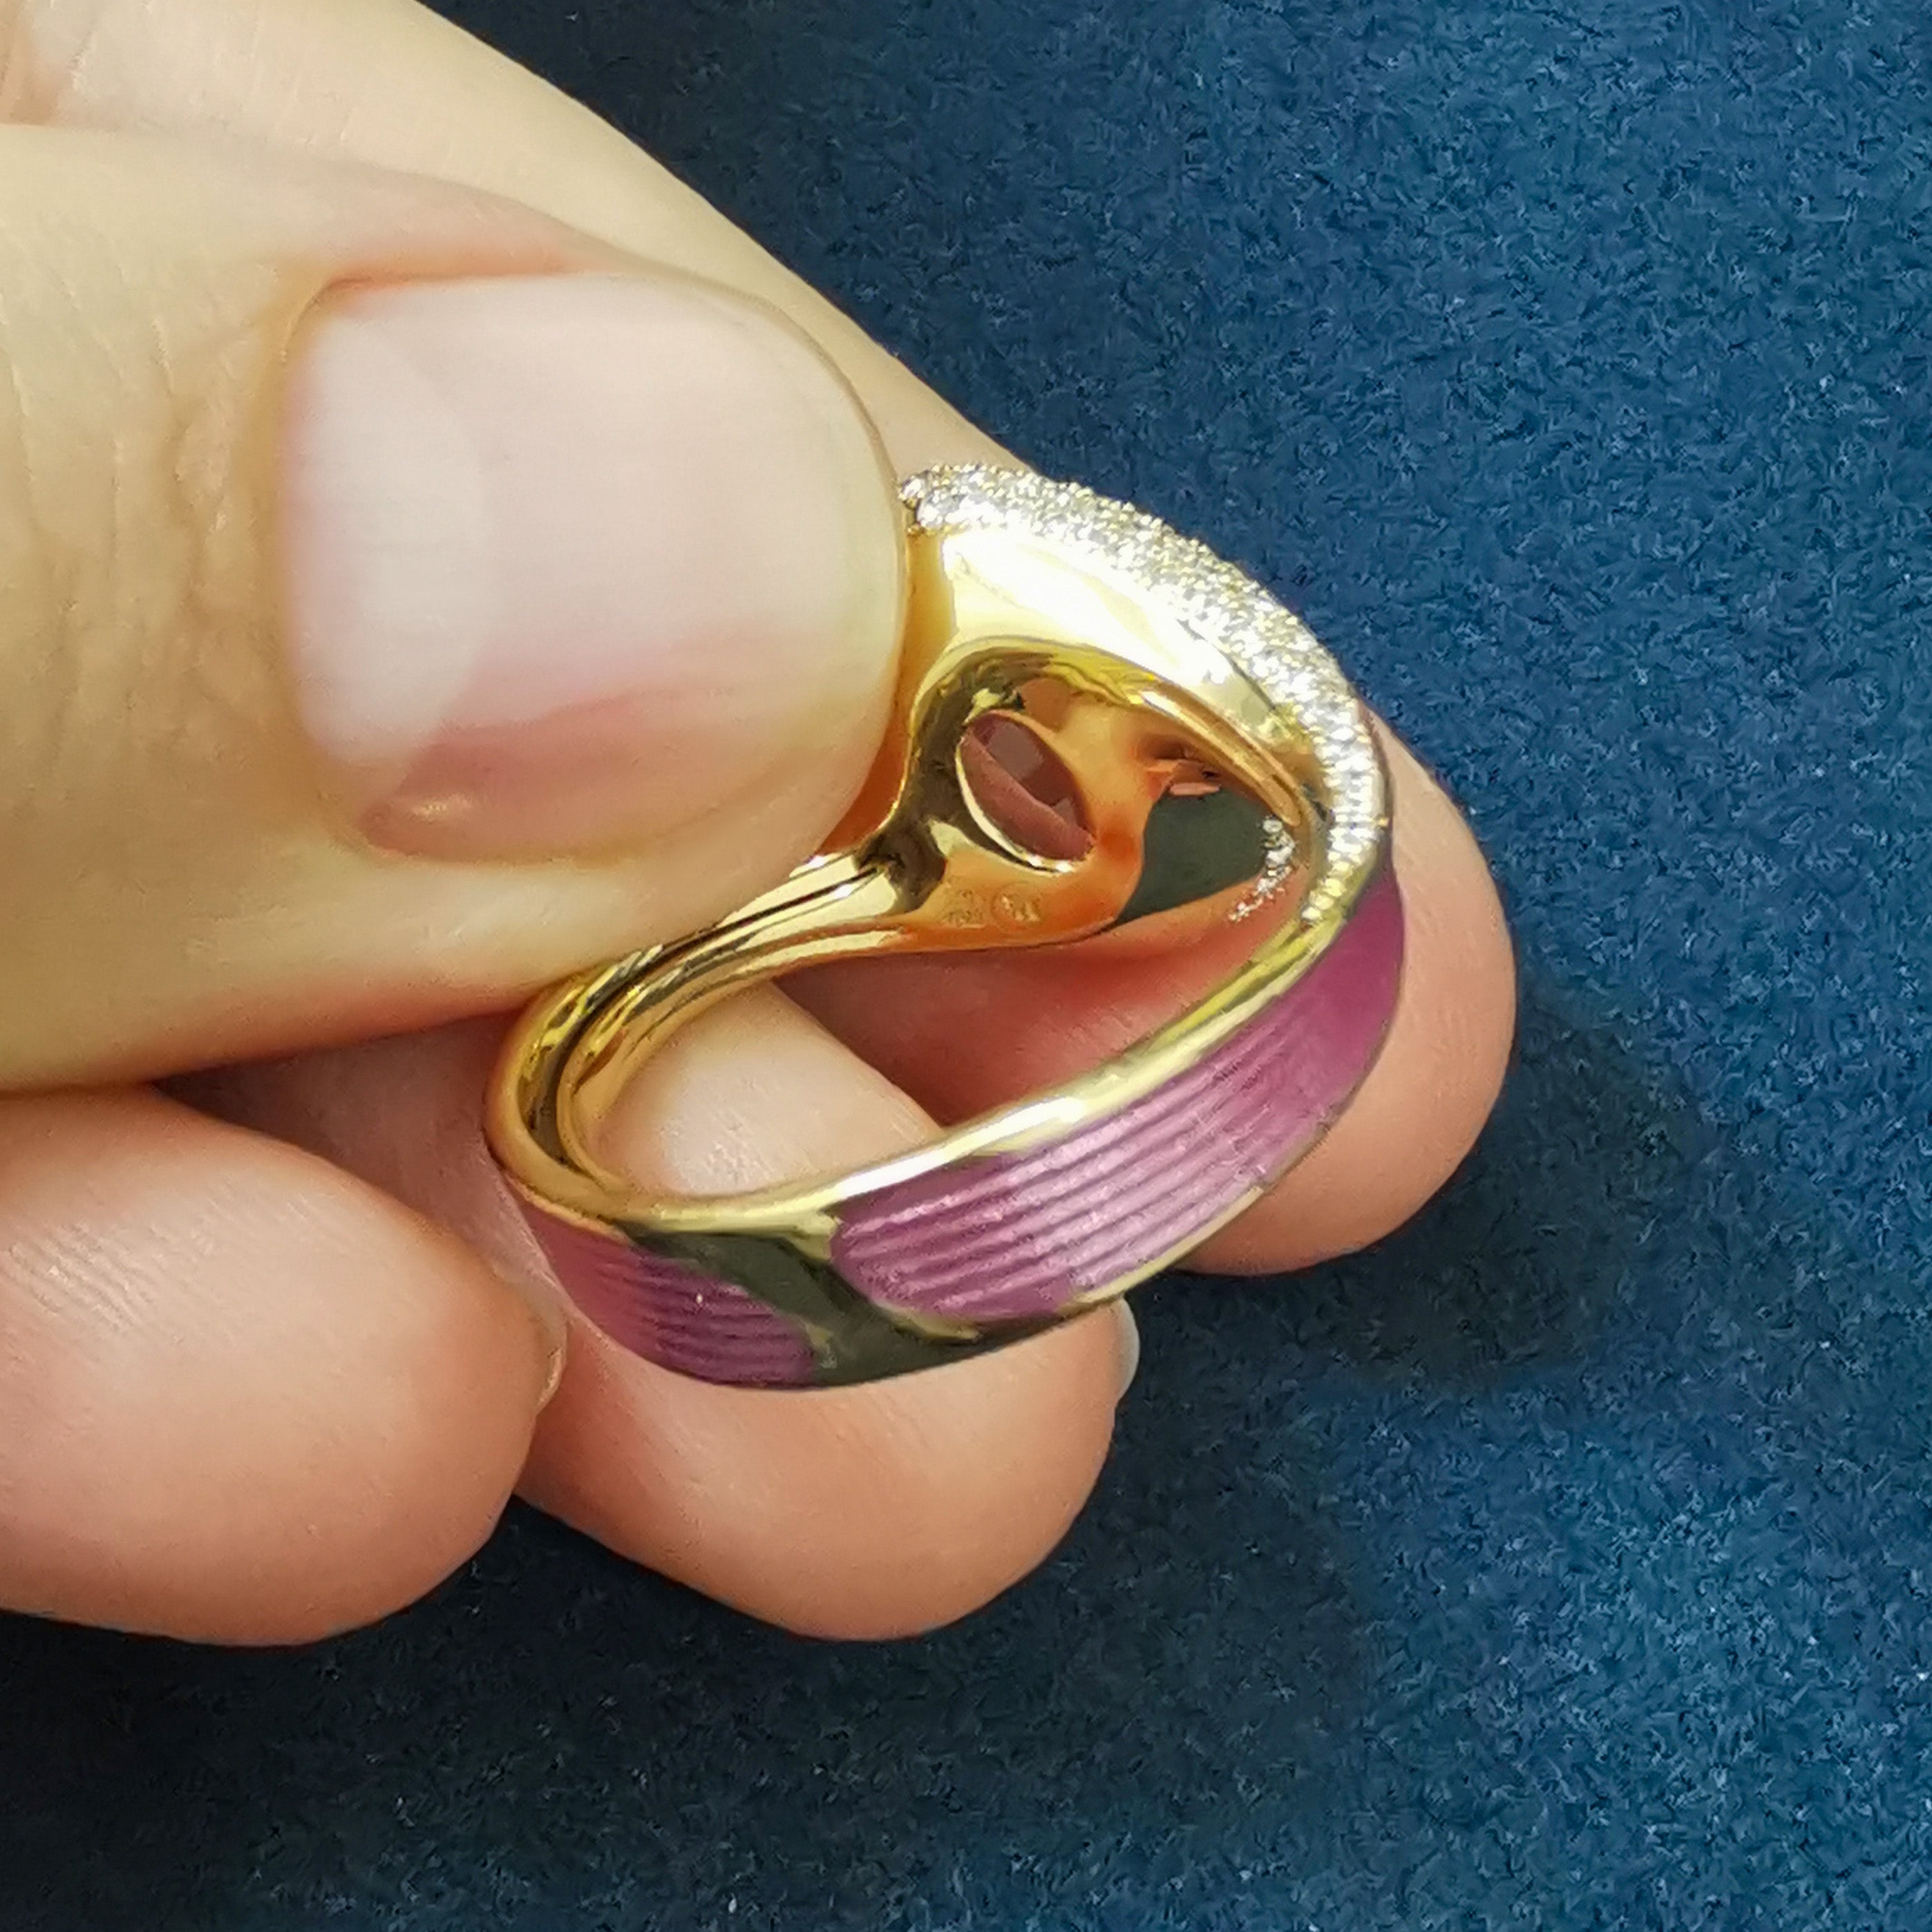 R 0123-0 18K Yellow Gold, Enamel, Morganite, Diamonds Ring